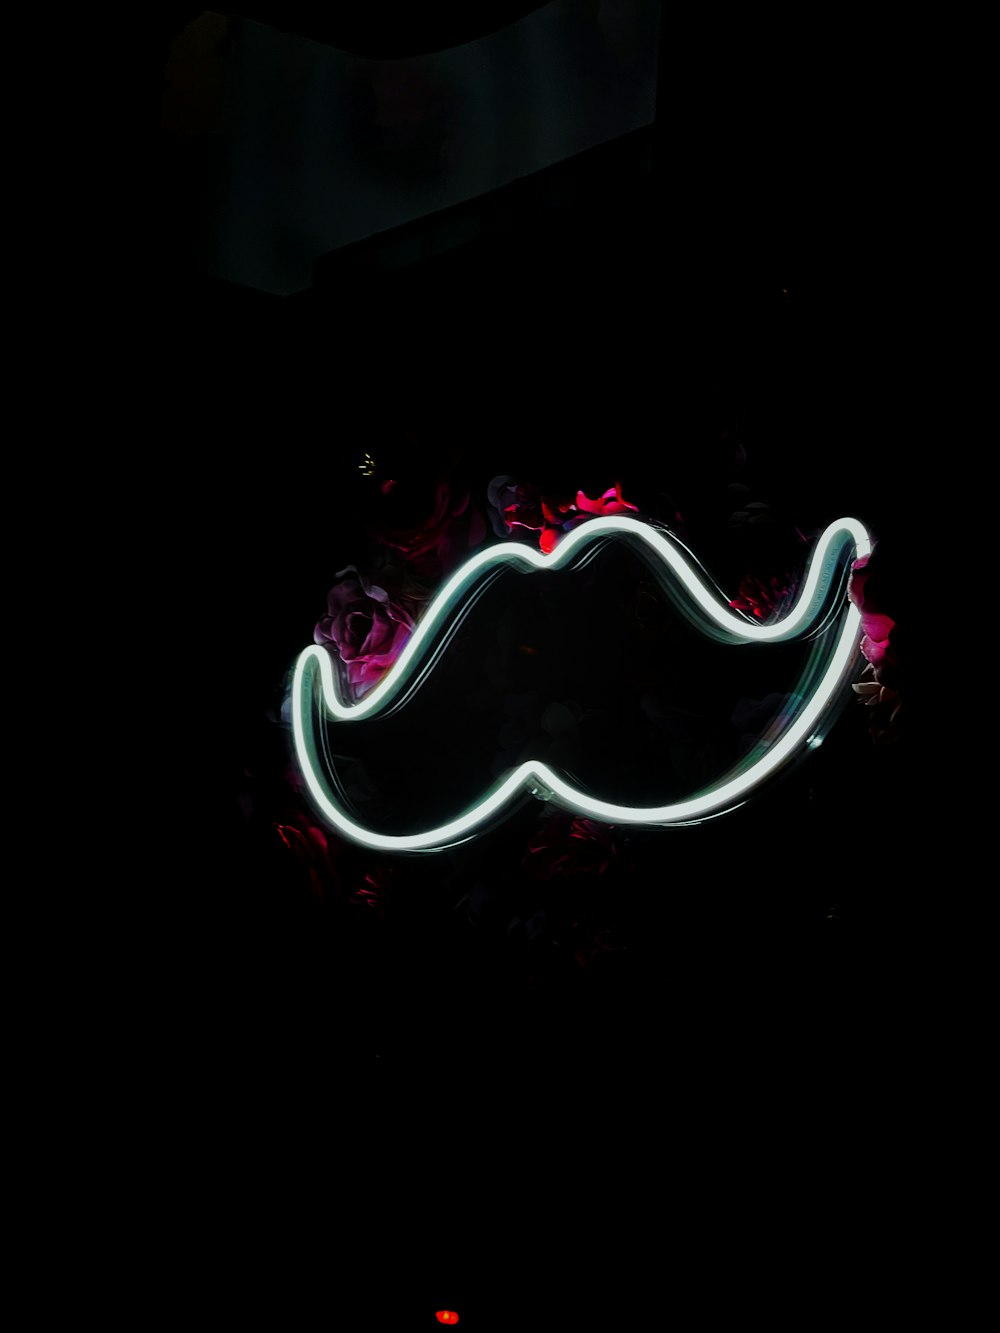 a neon moustache on a black background